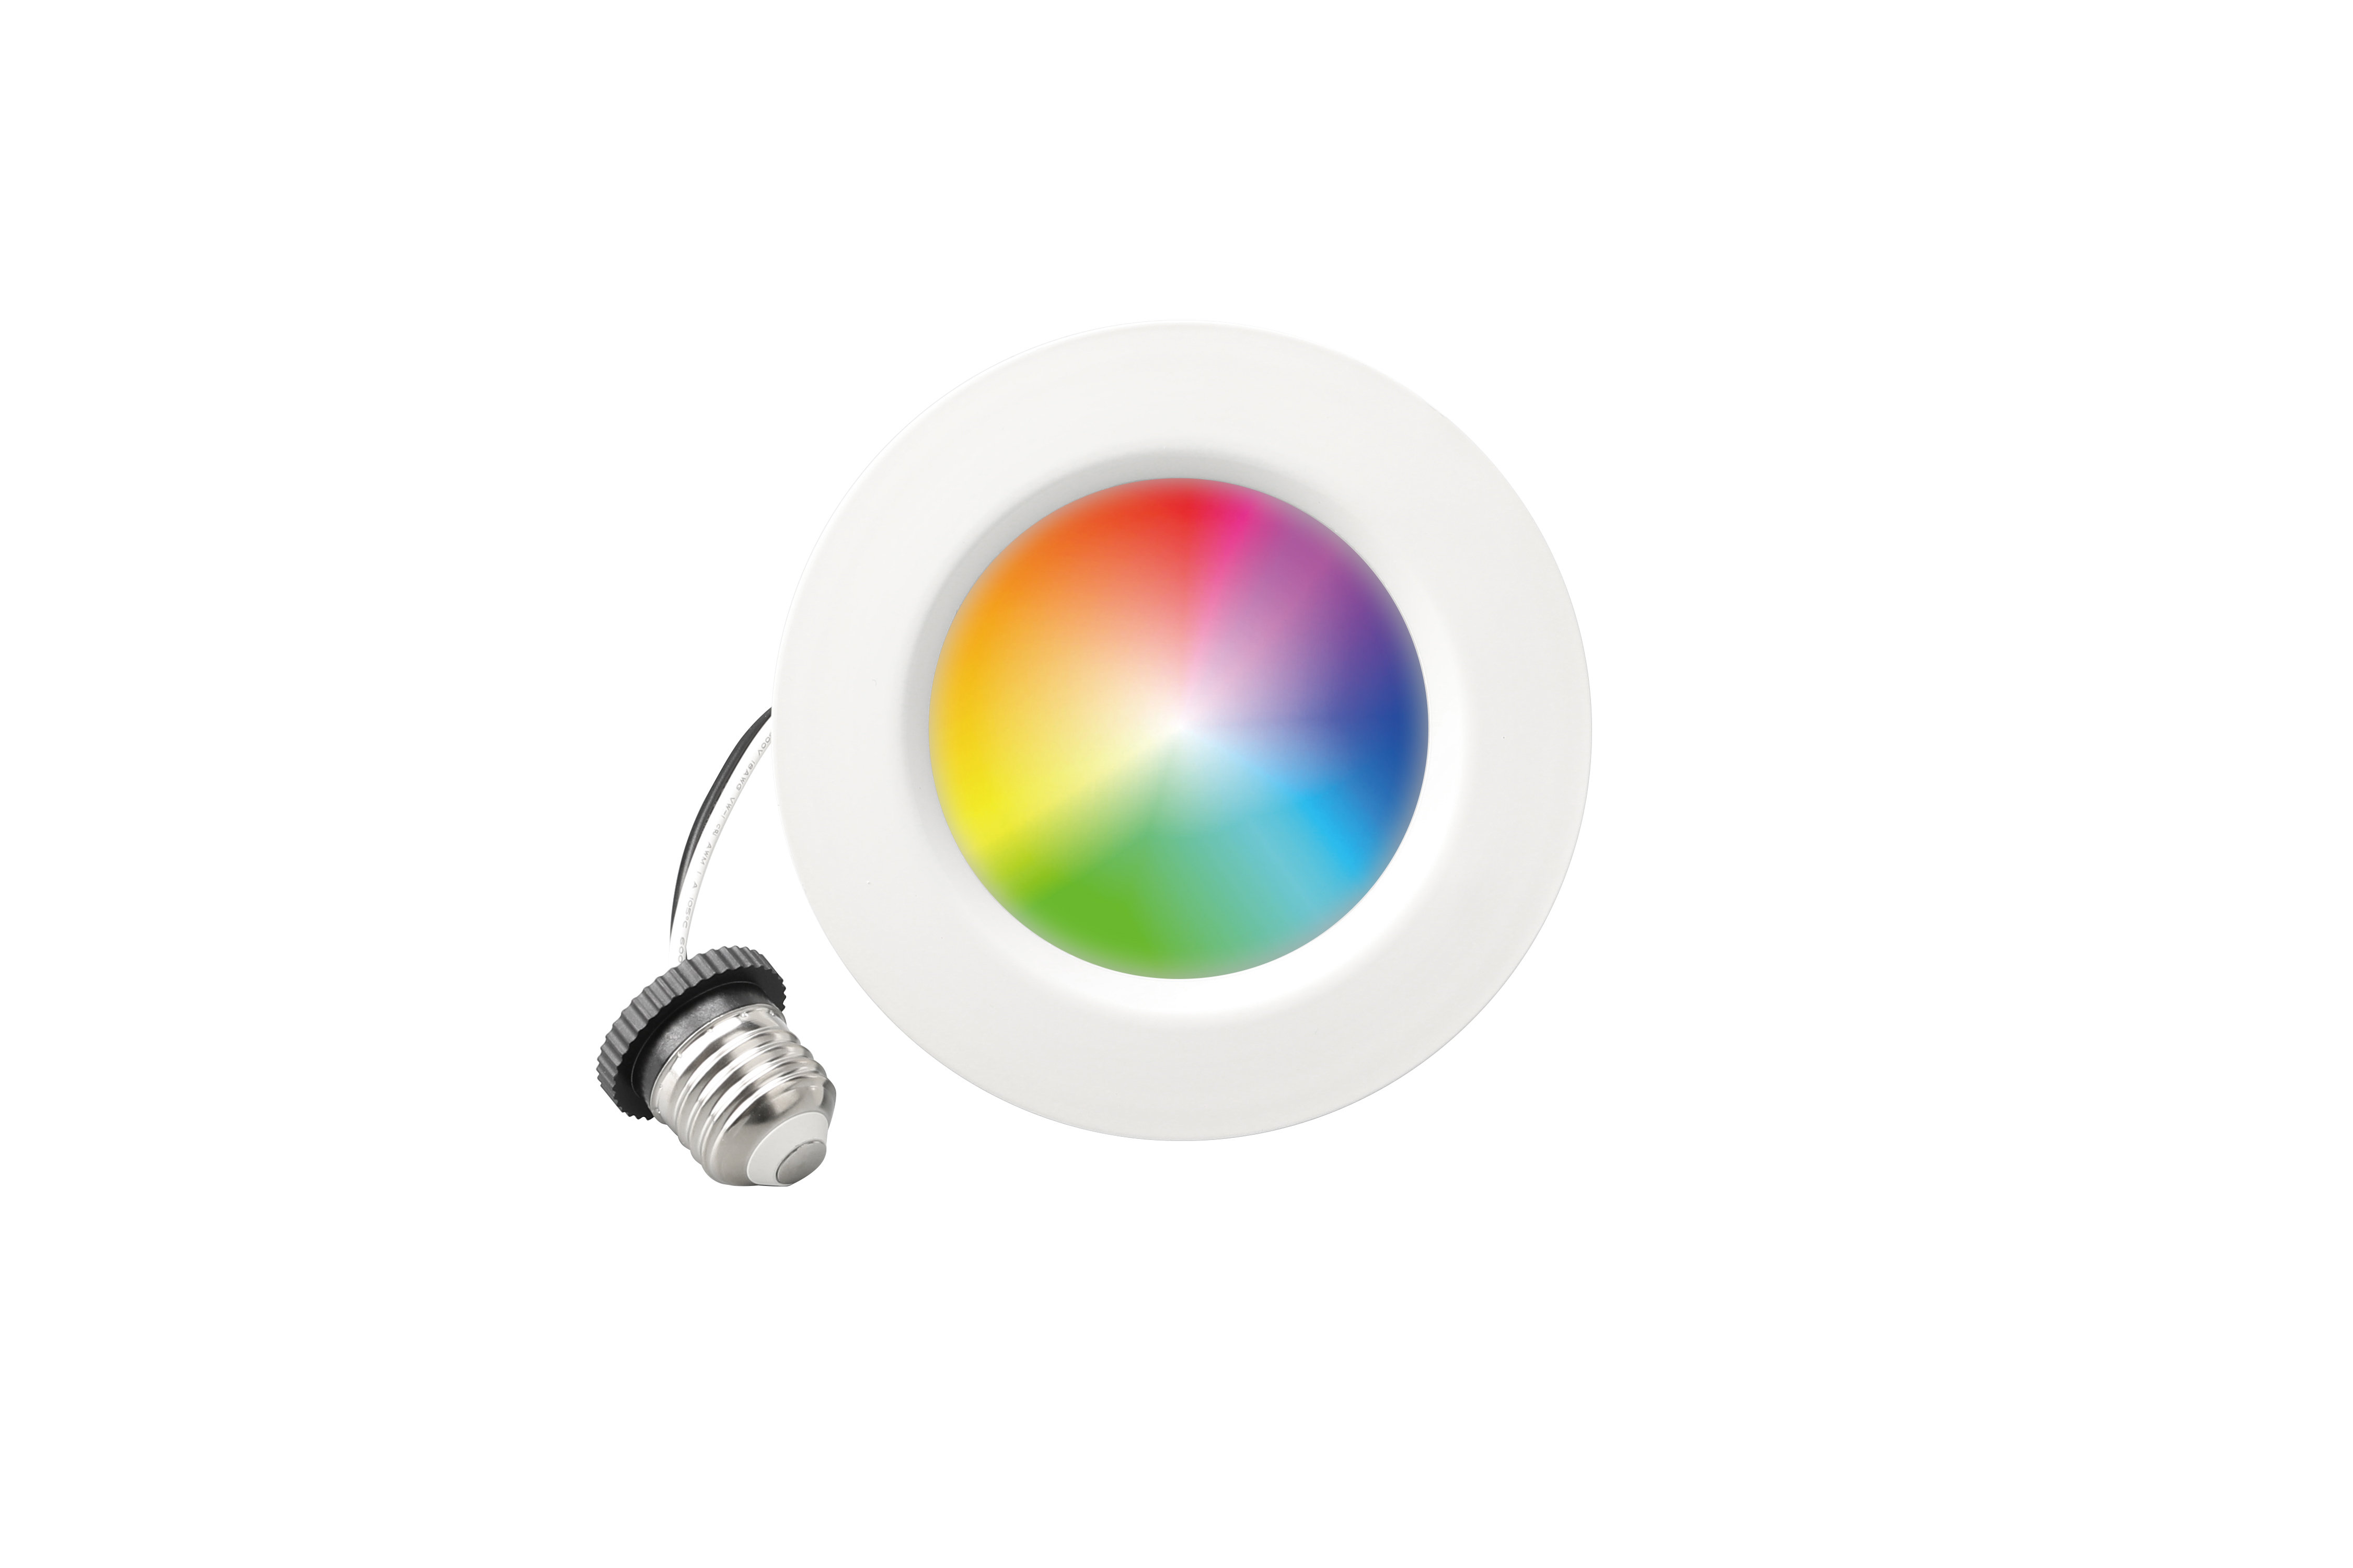 LED Lighting - Understanding Color Temperature - The Retrofit